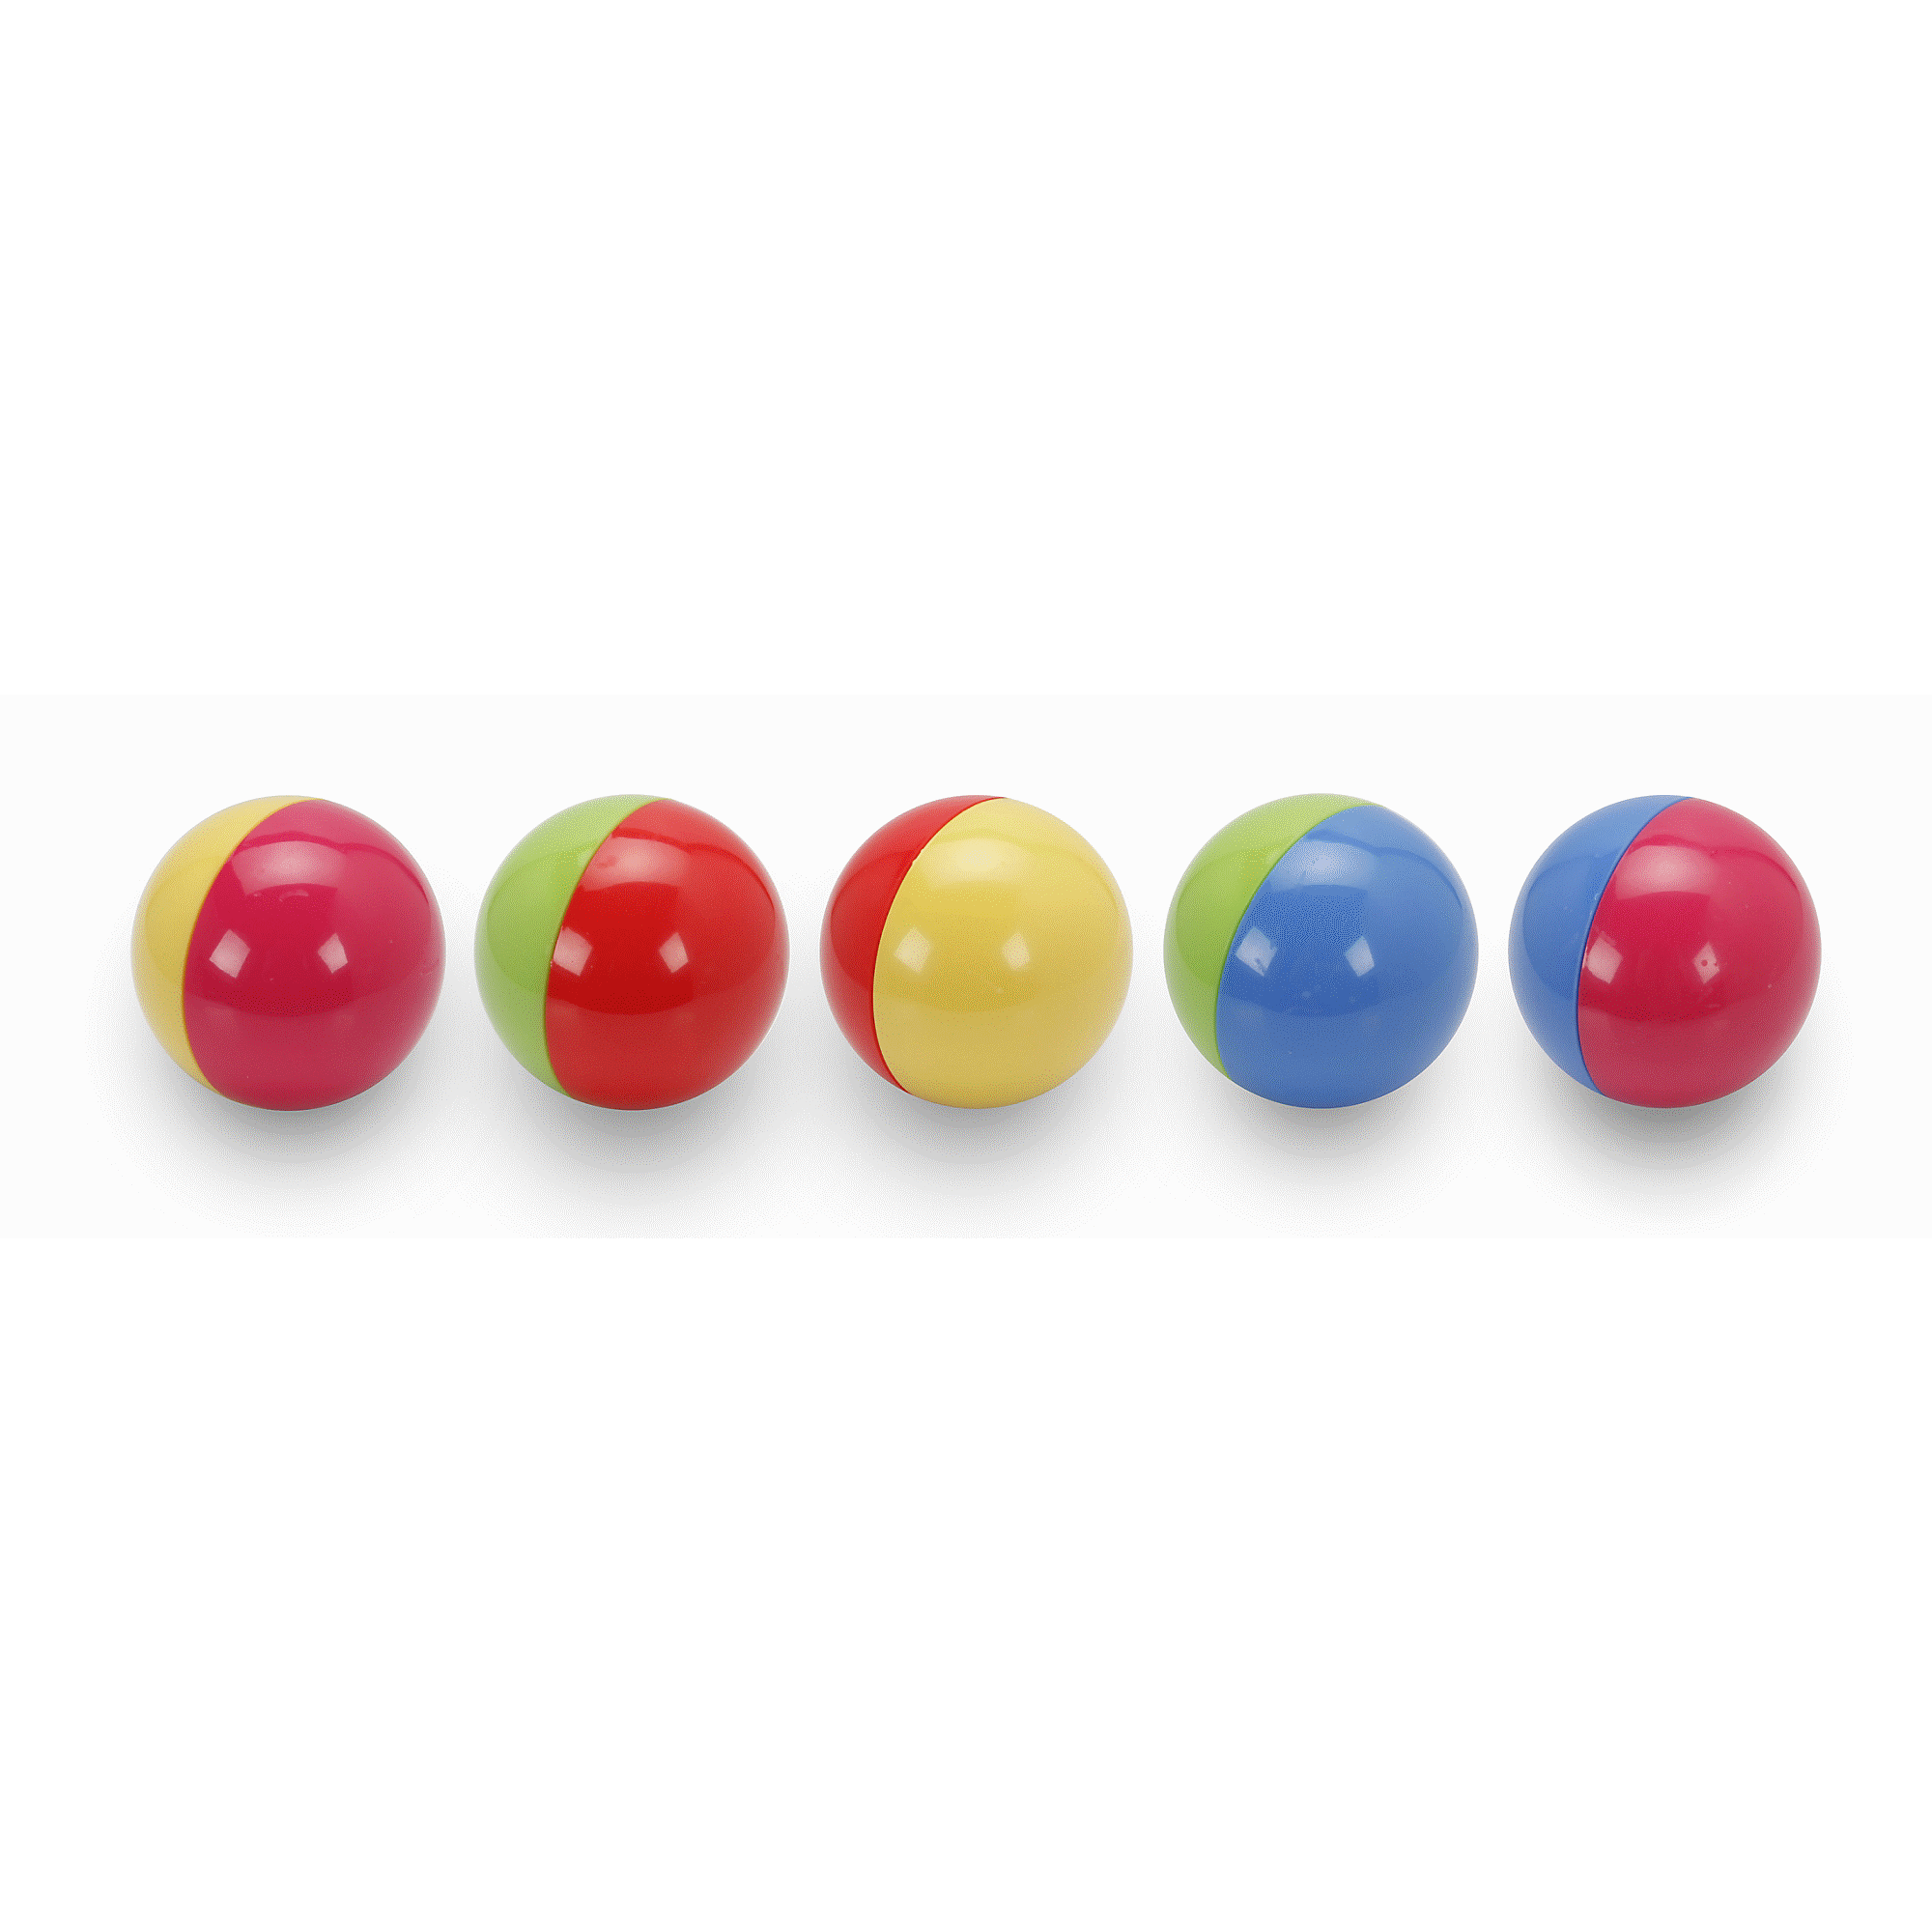 Pic 'n' Pop Balls (pack of 5)